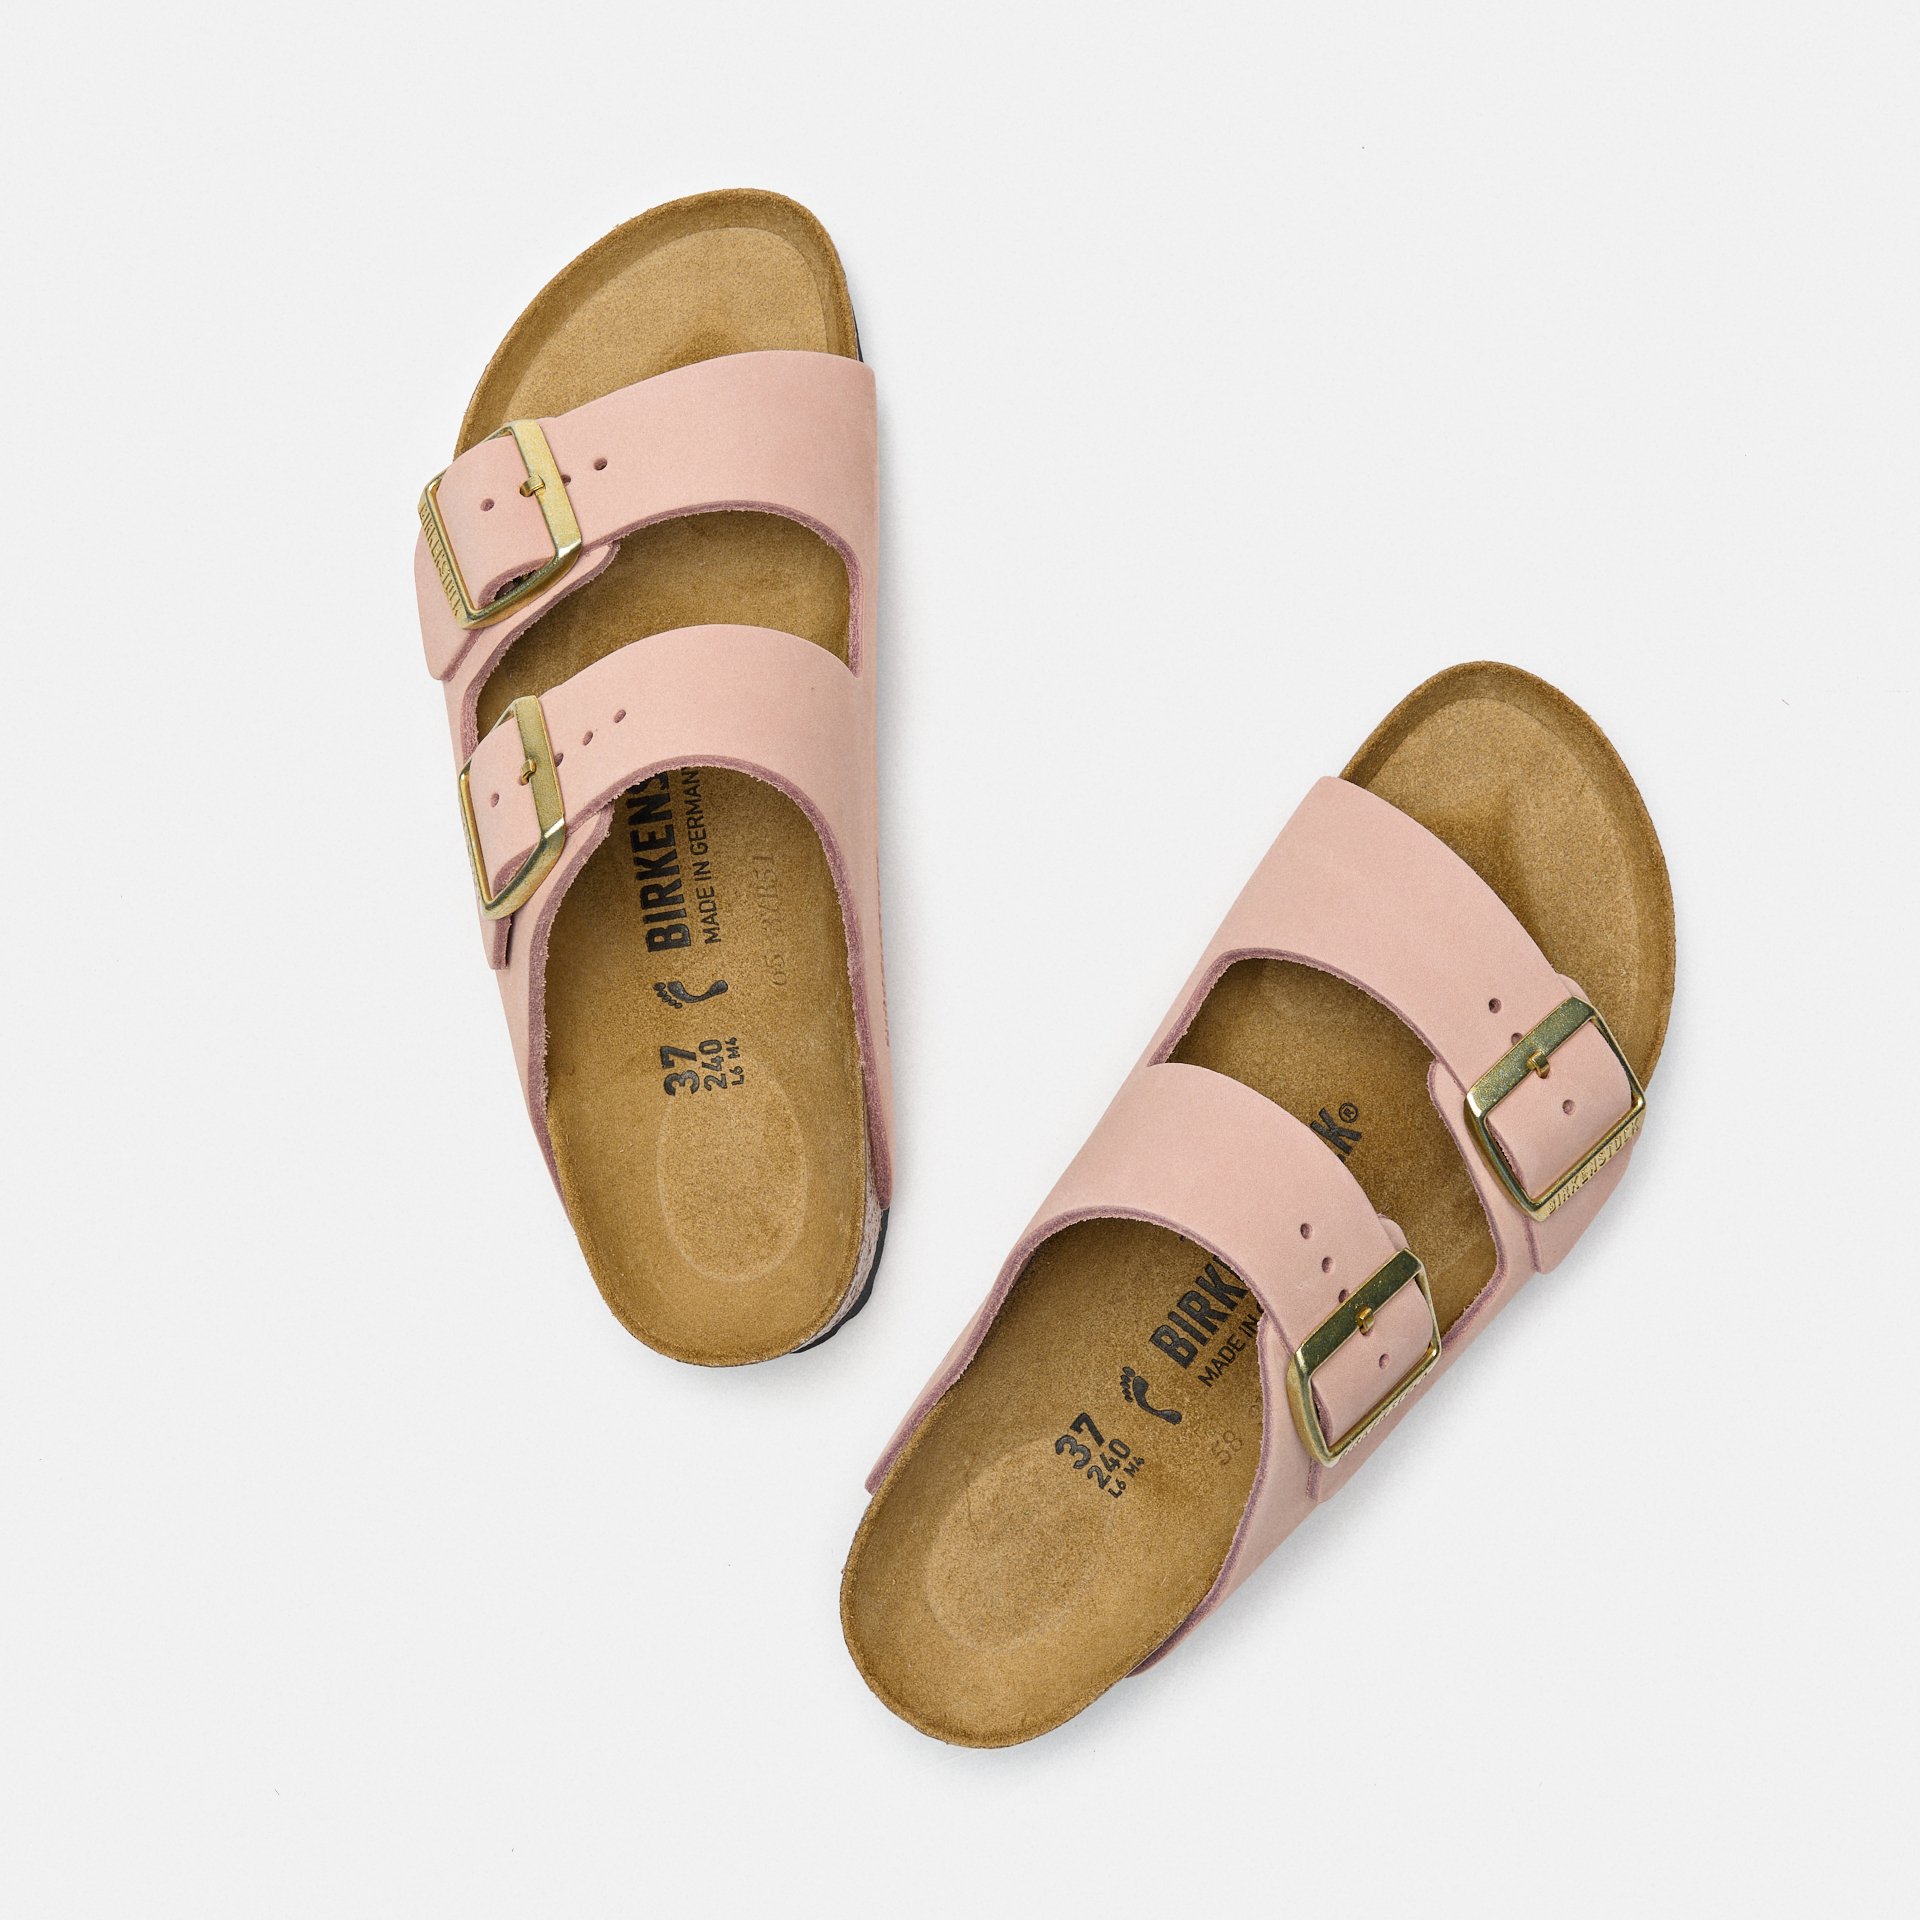 Birkenstock Arizona Nubuck Leather Sandals Soft Pink